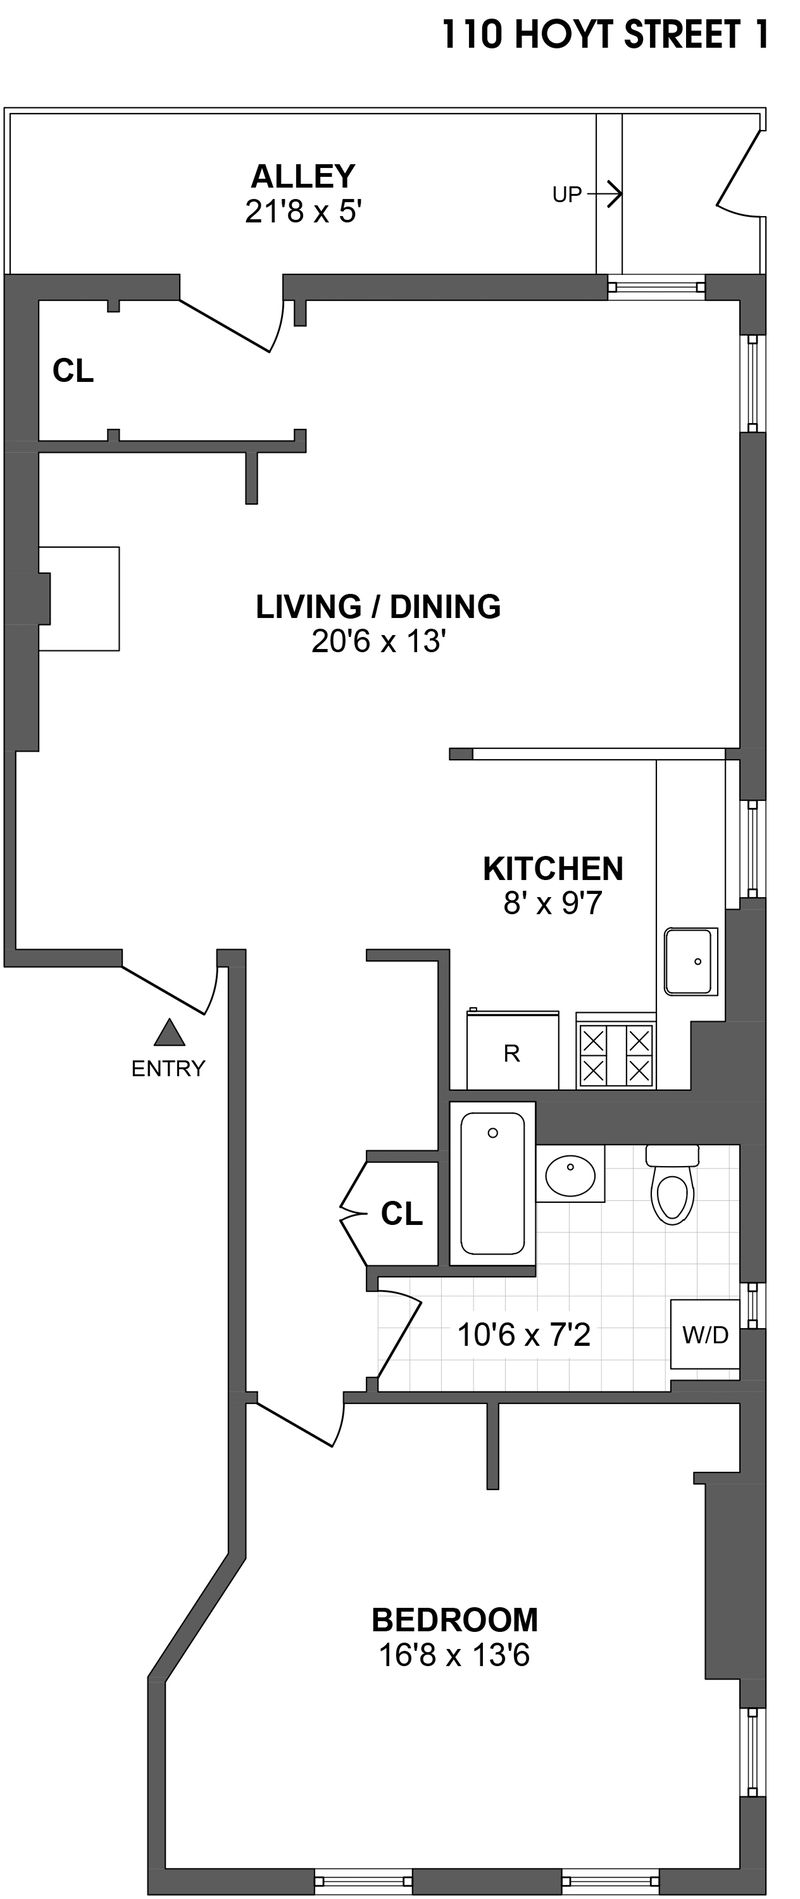 Floorplan for 110 Hoyt Street, 1